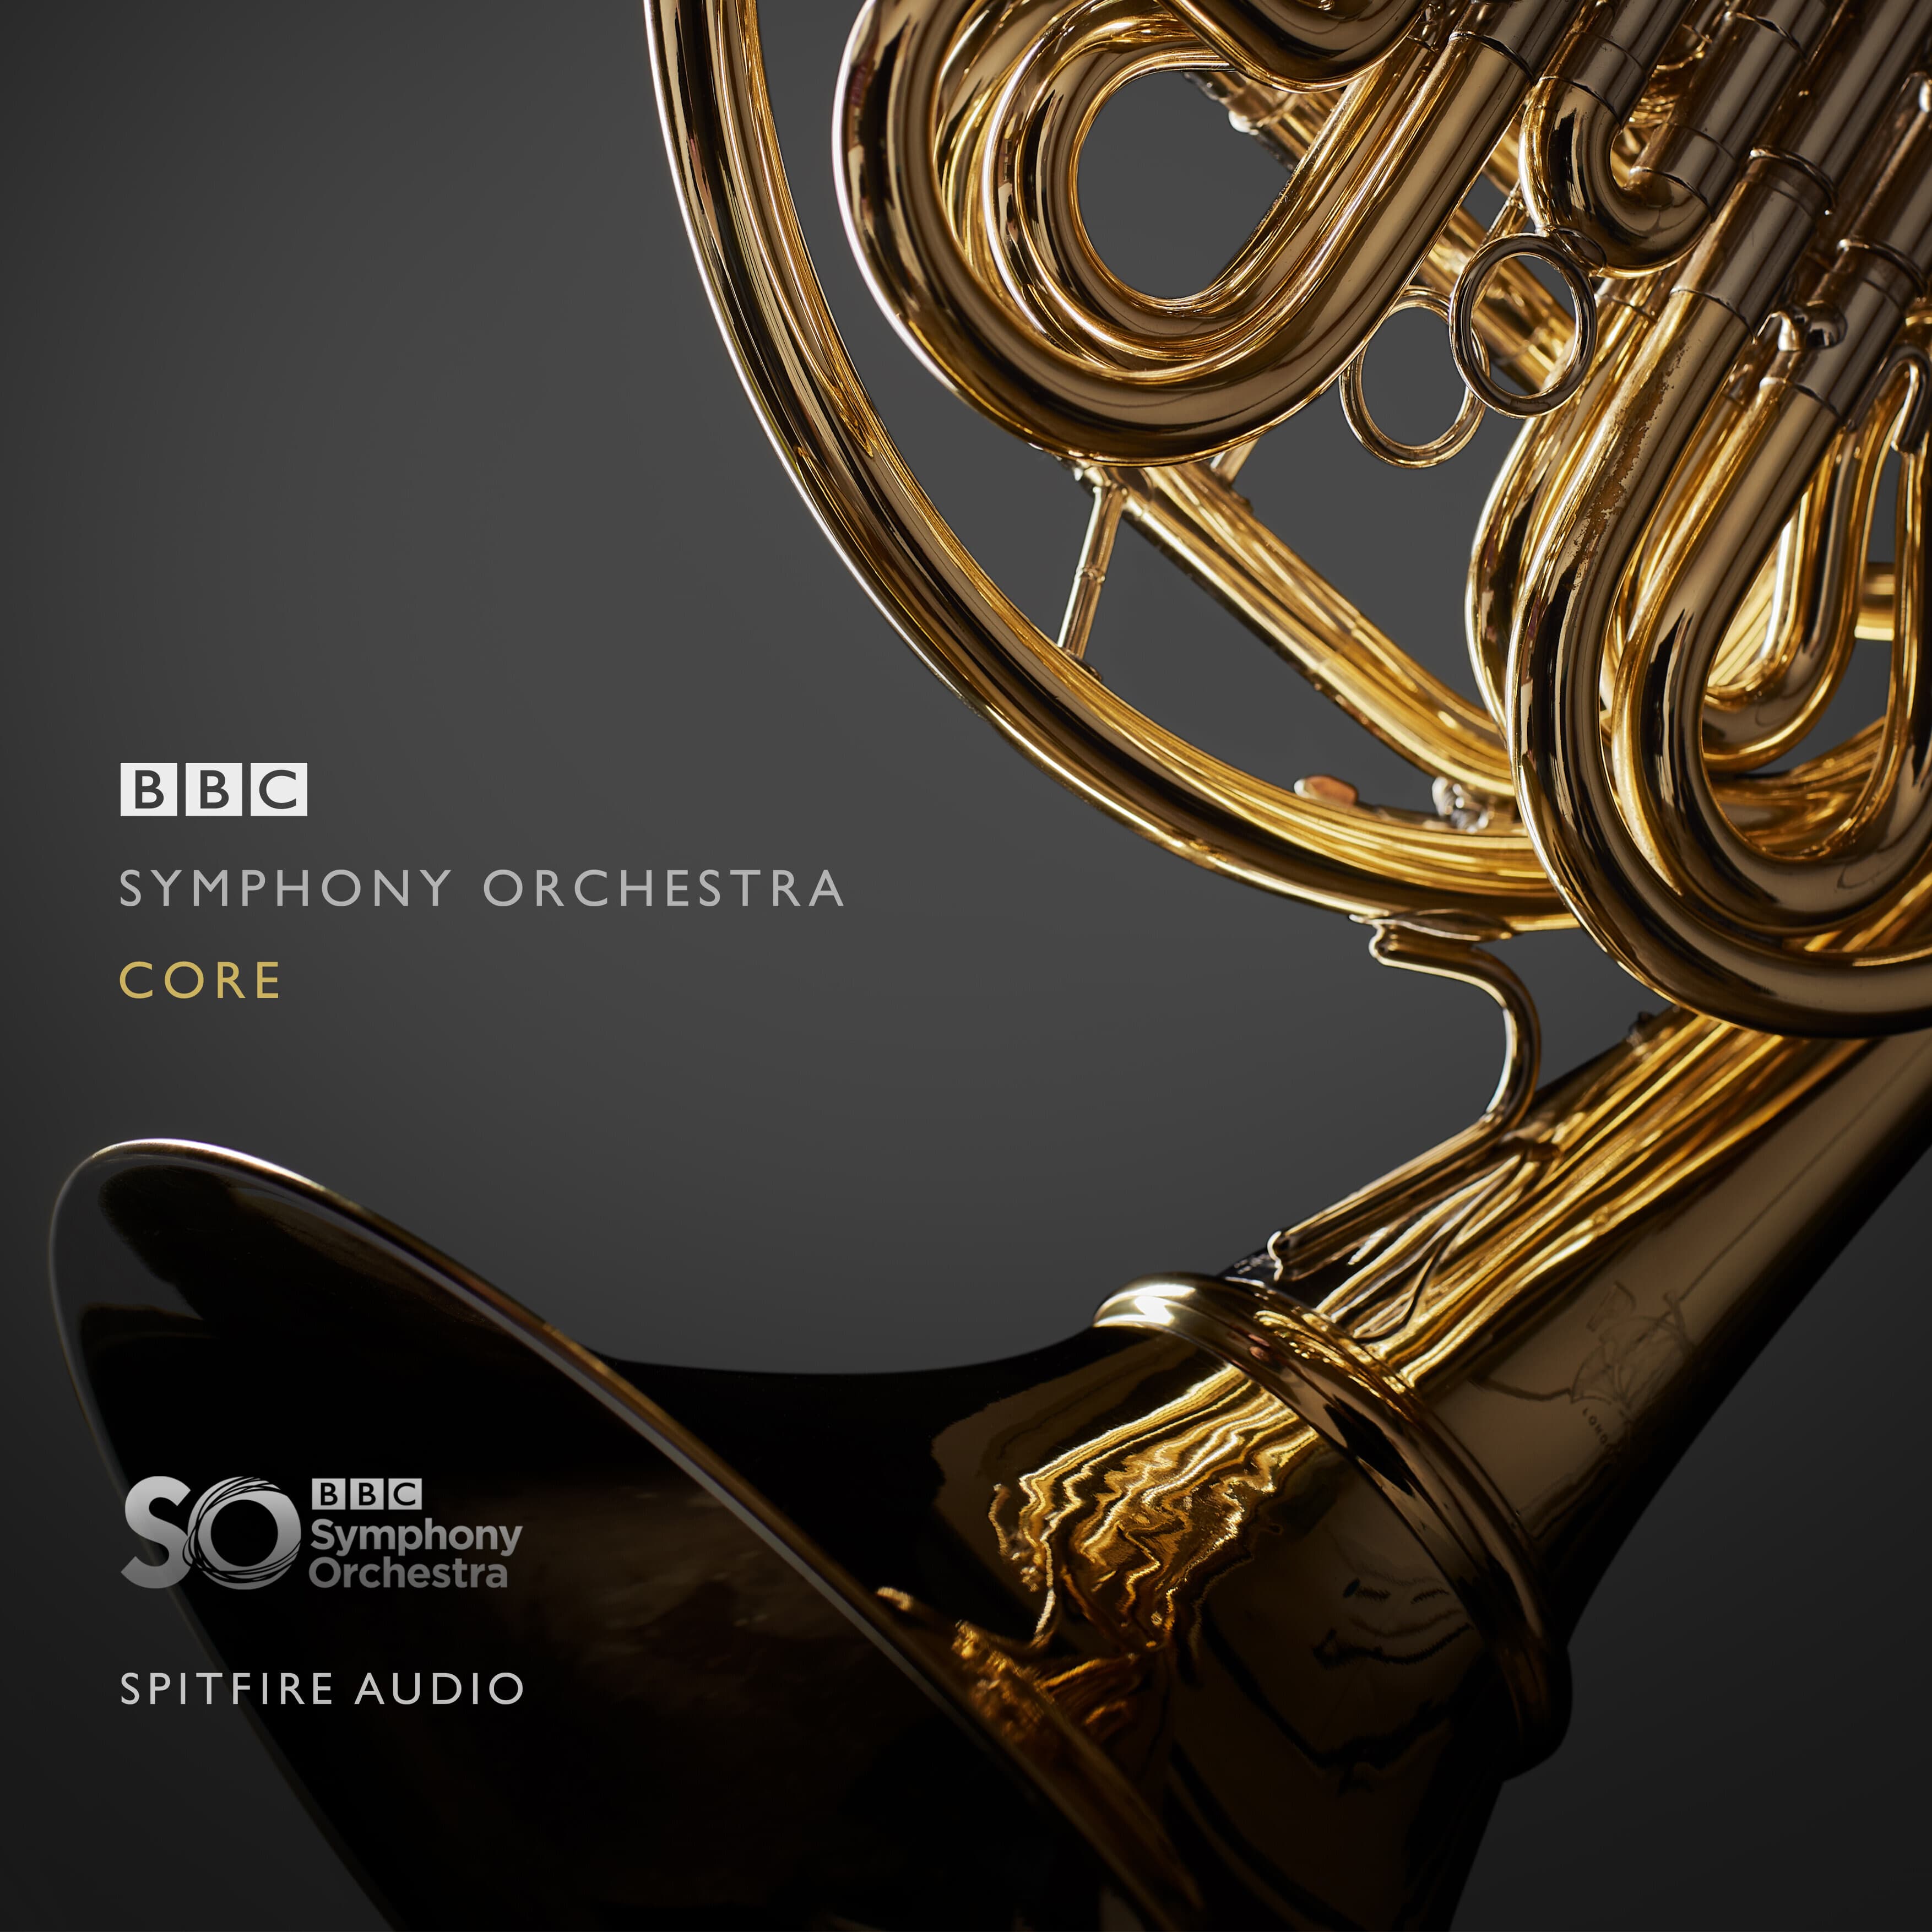 BBC Symphony Orchestra Core